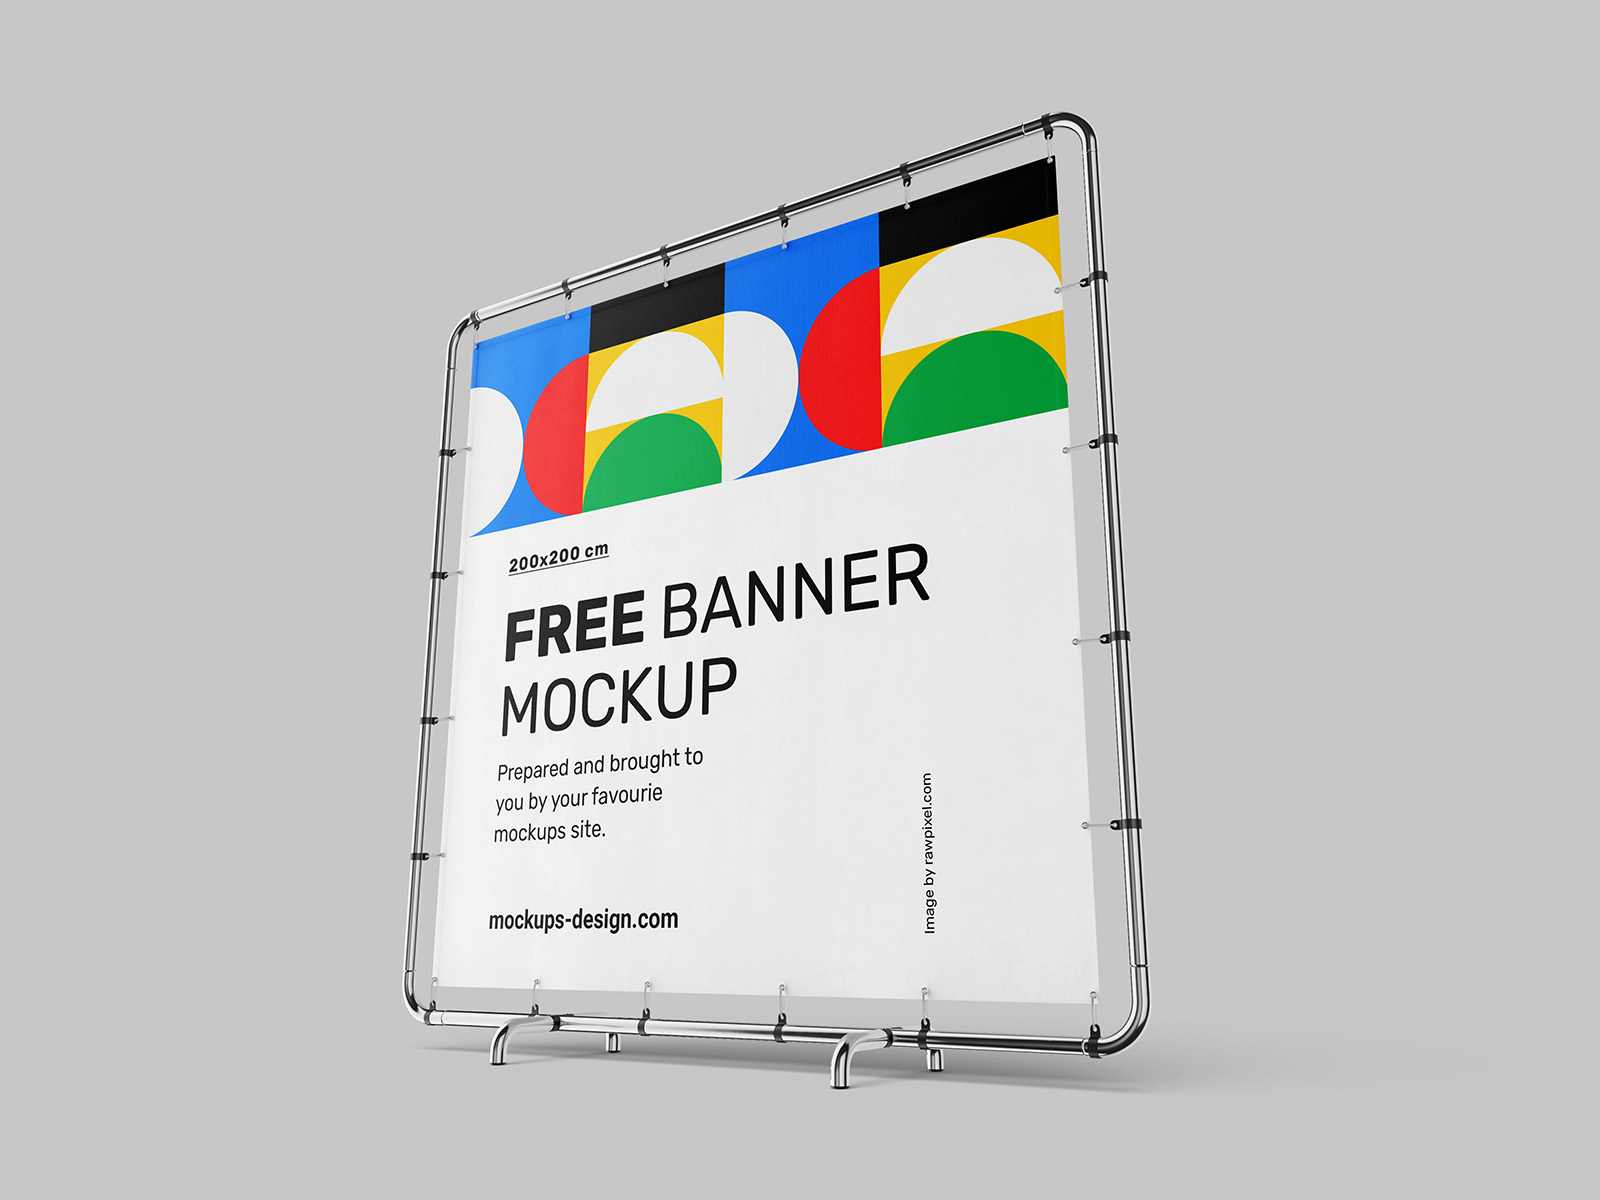 Free baner mockup / 200 x 200 cm